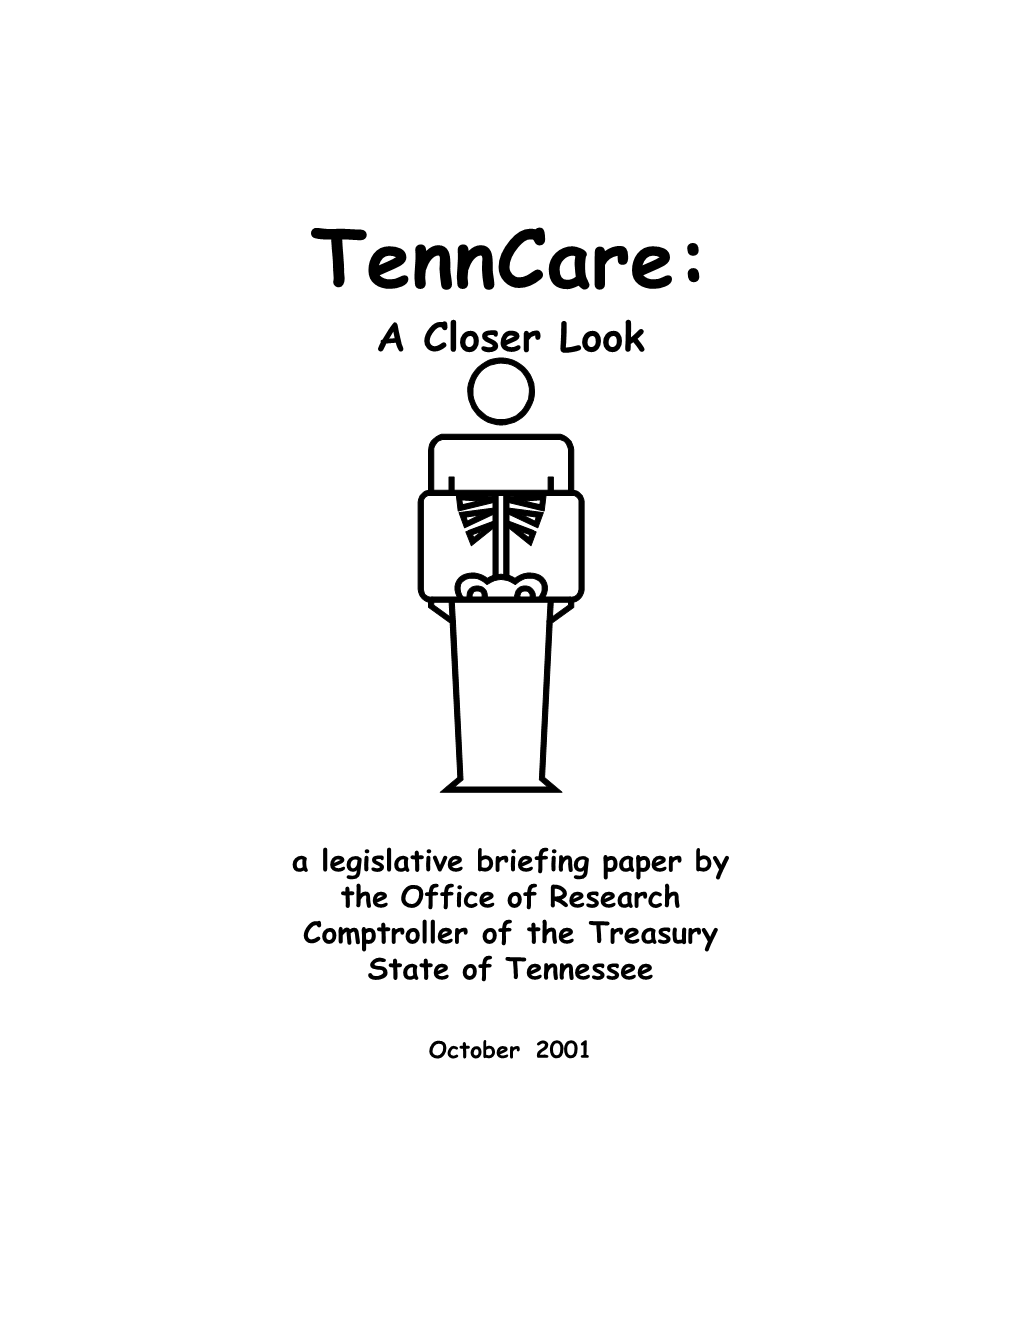 Tenncare: a Closer Look